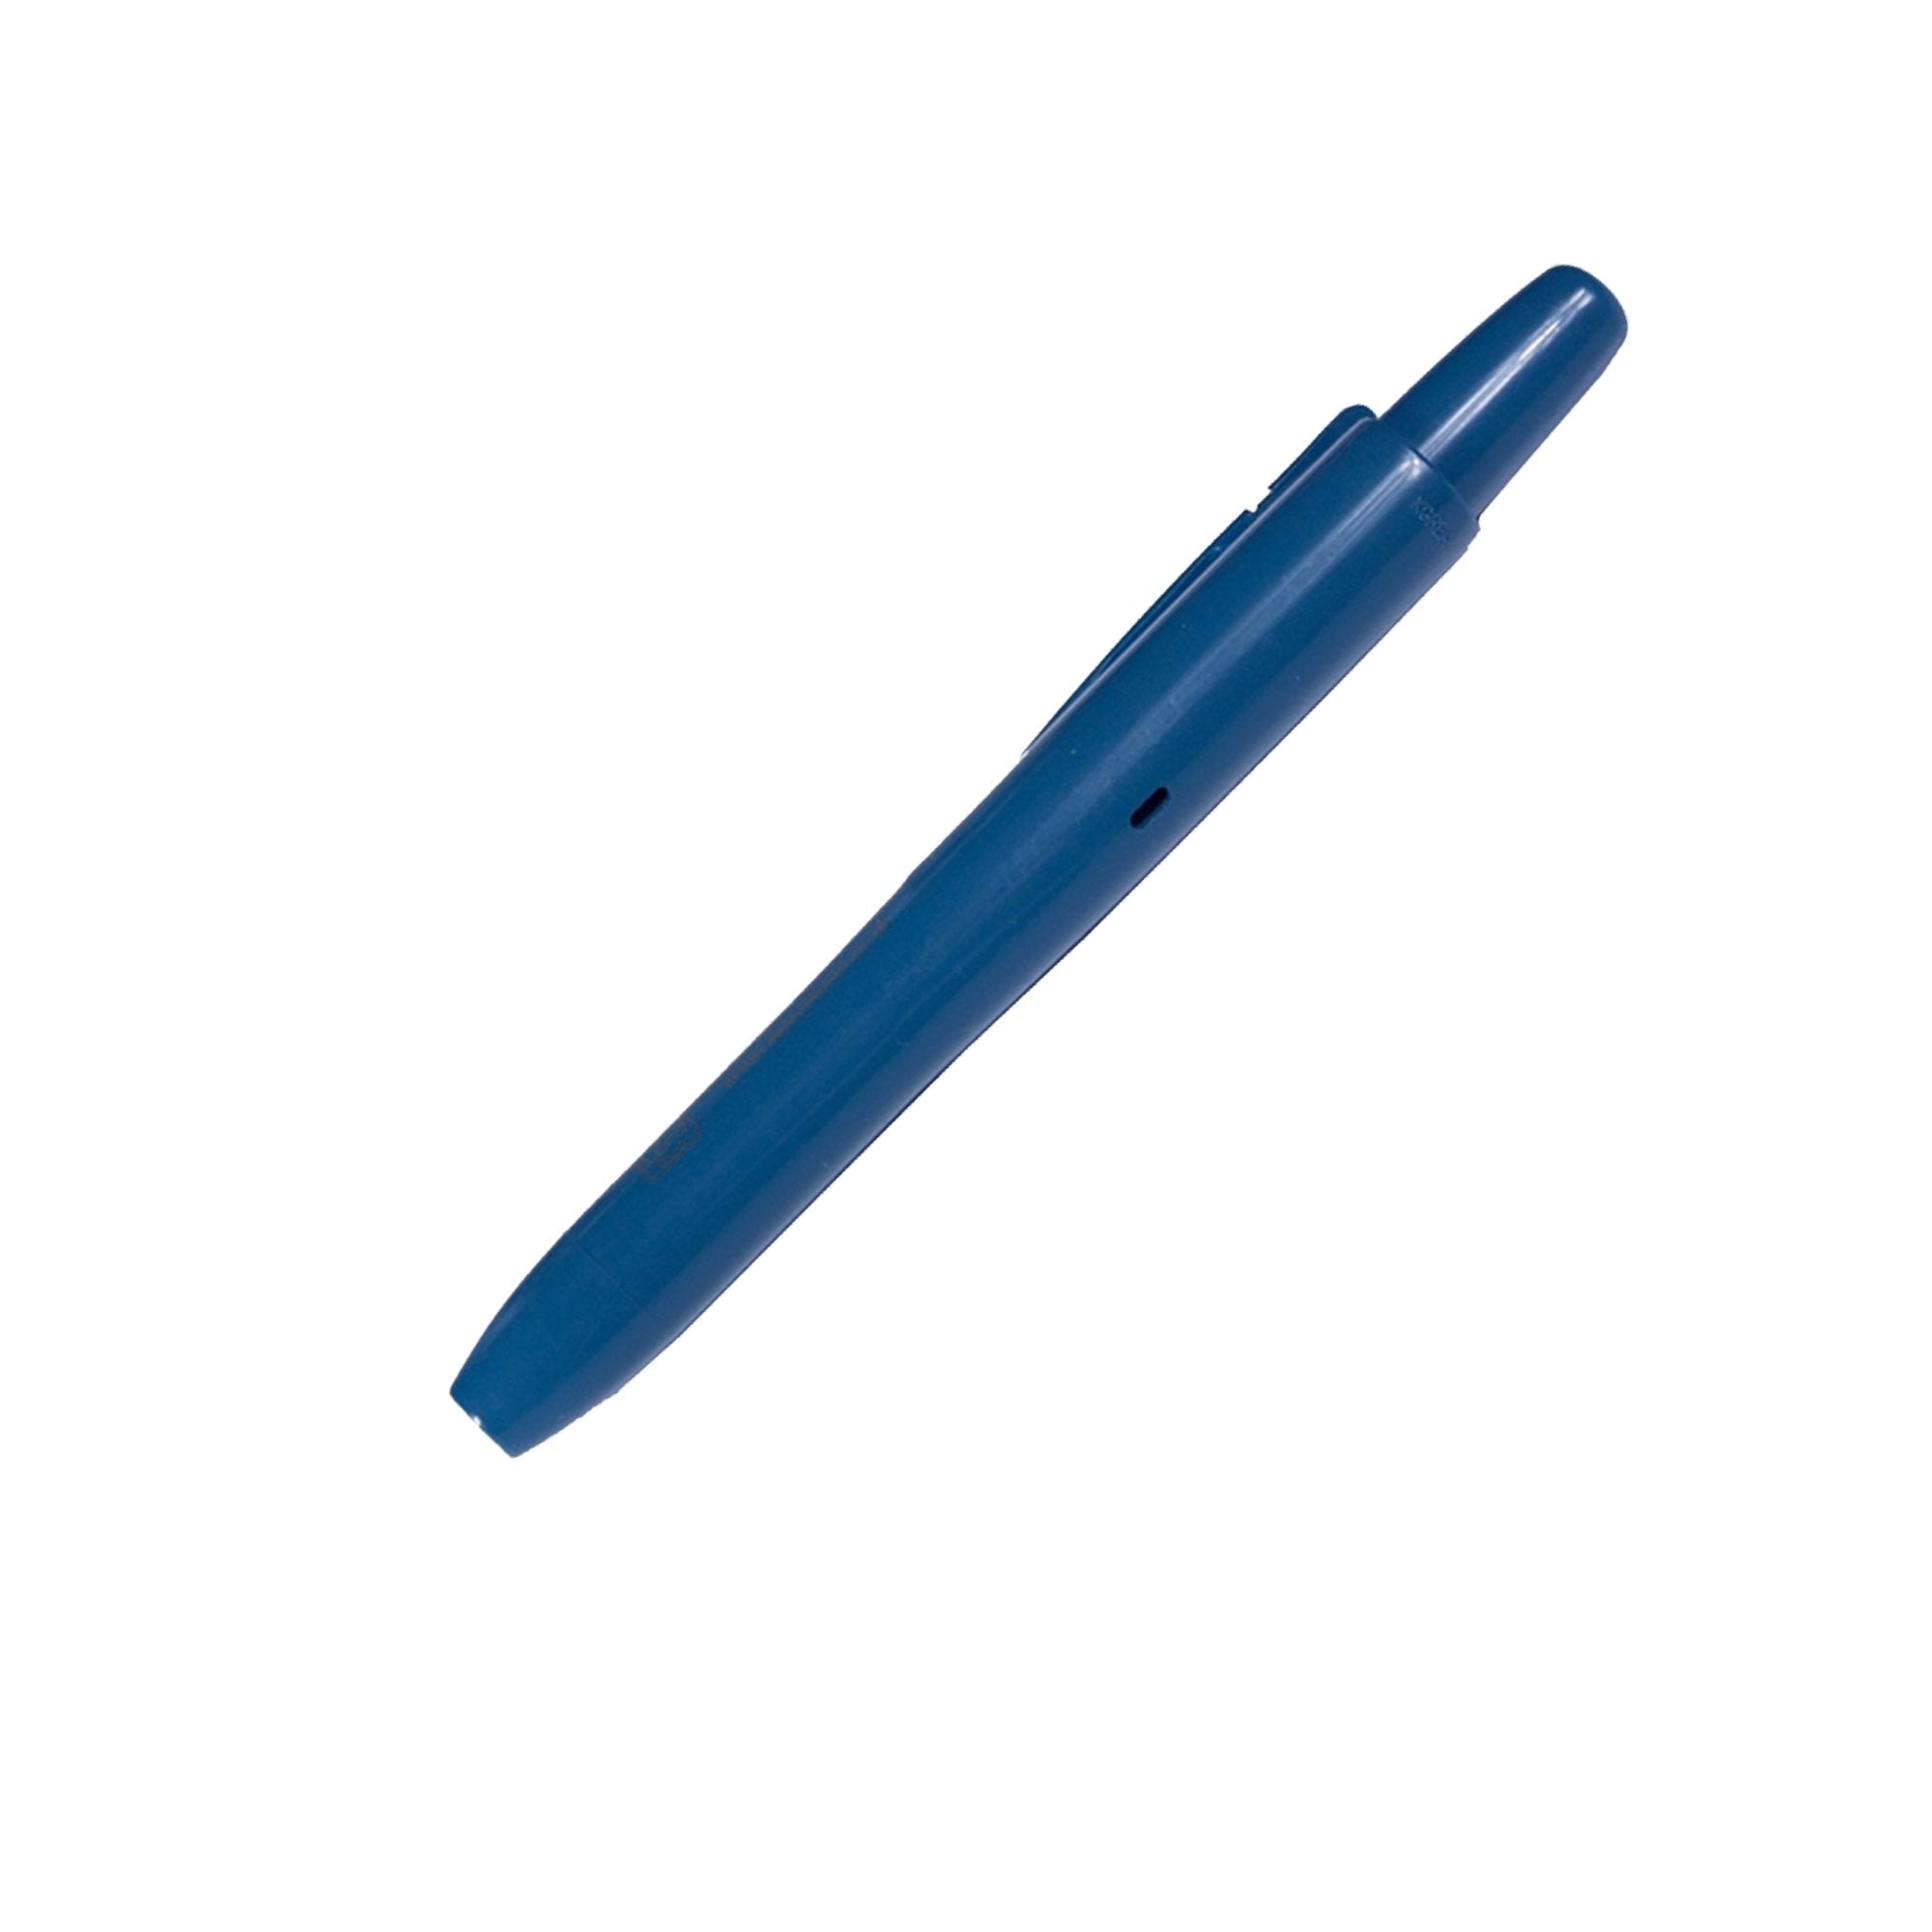 linea-flesh-pennarello-detectabile-indelebile-retrattile-punta-tonda-colore-blu